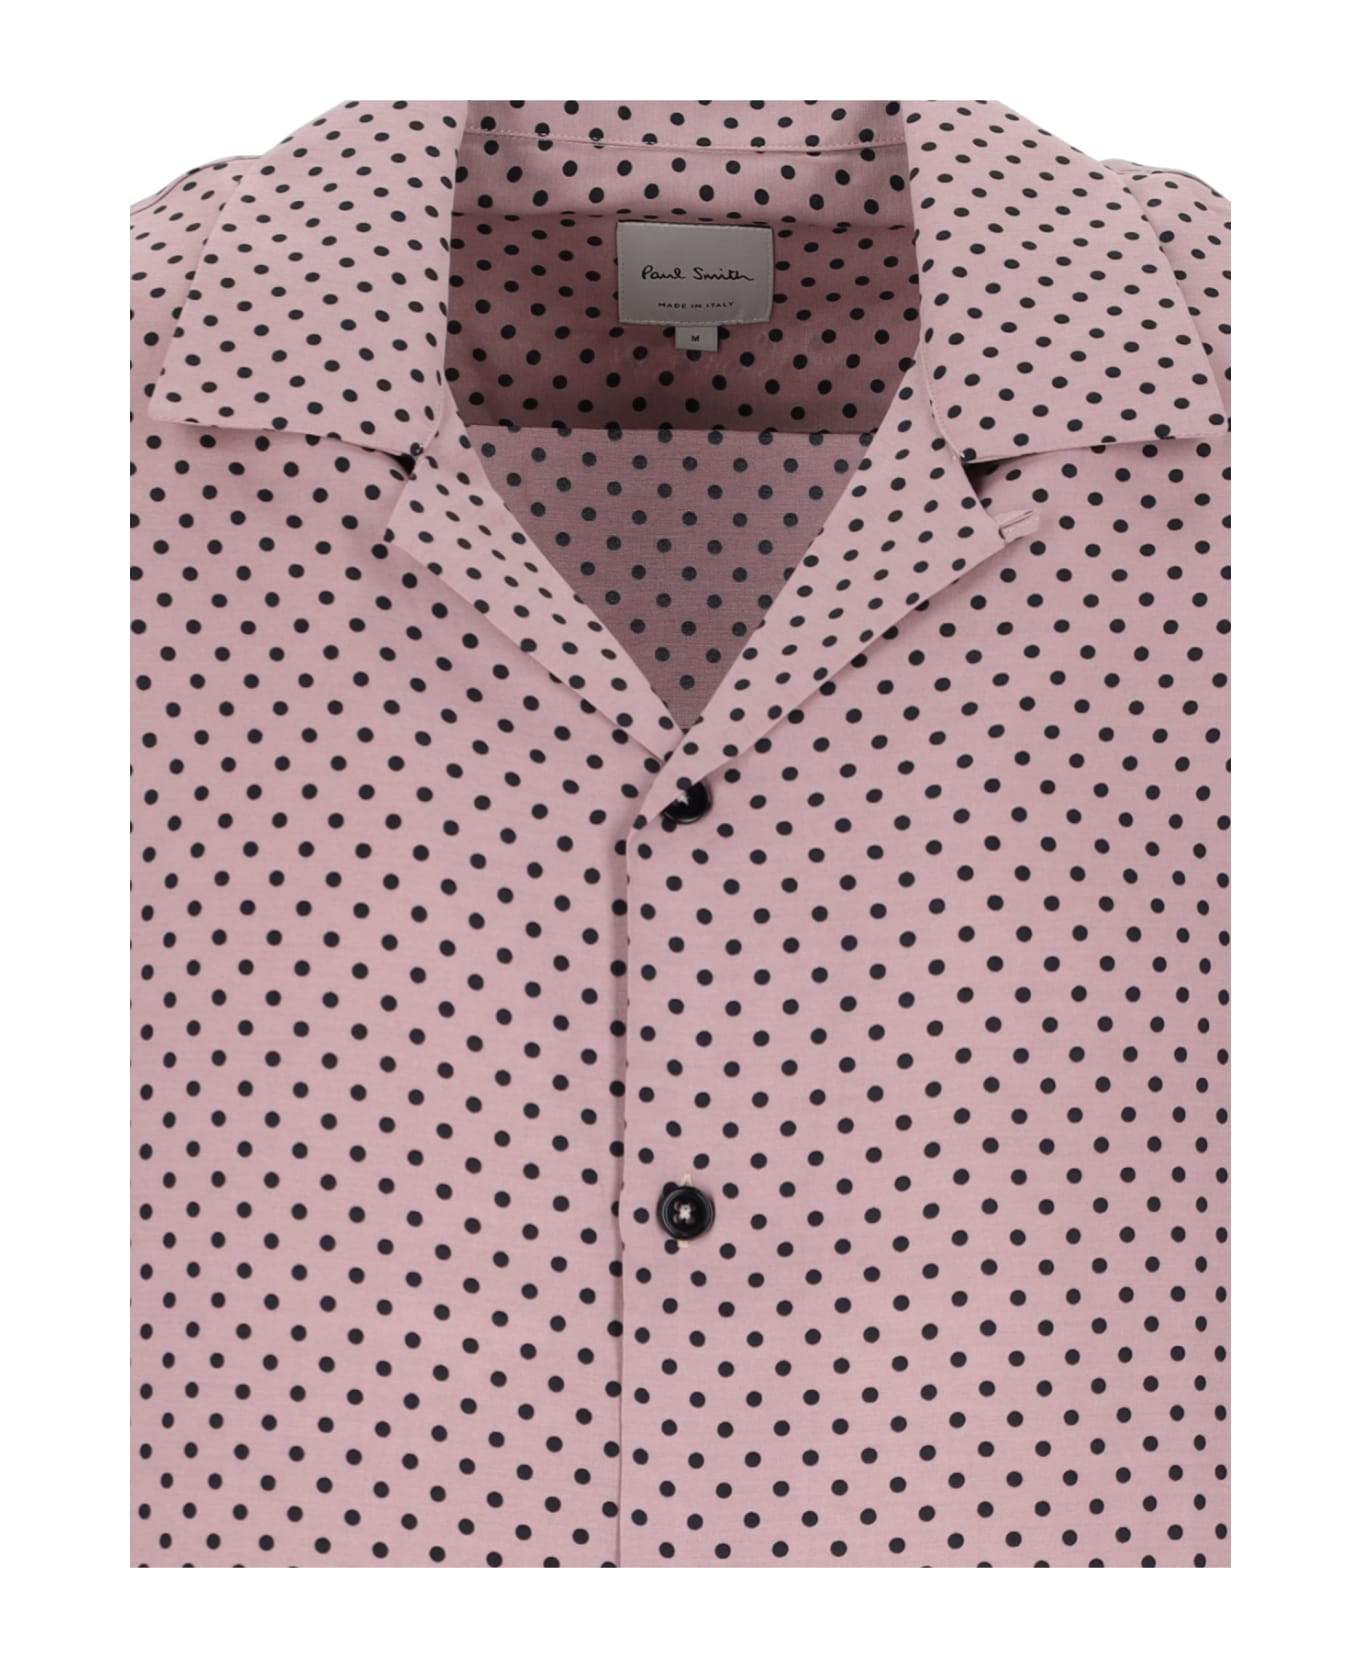 Paul Smith Polka Dot Shirt - Pink